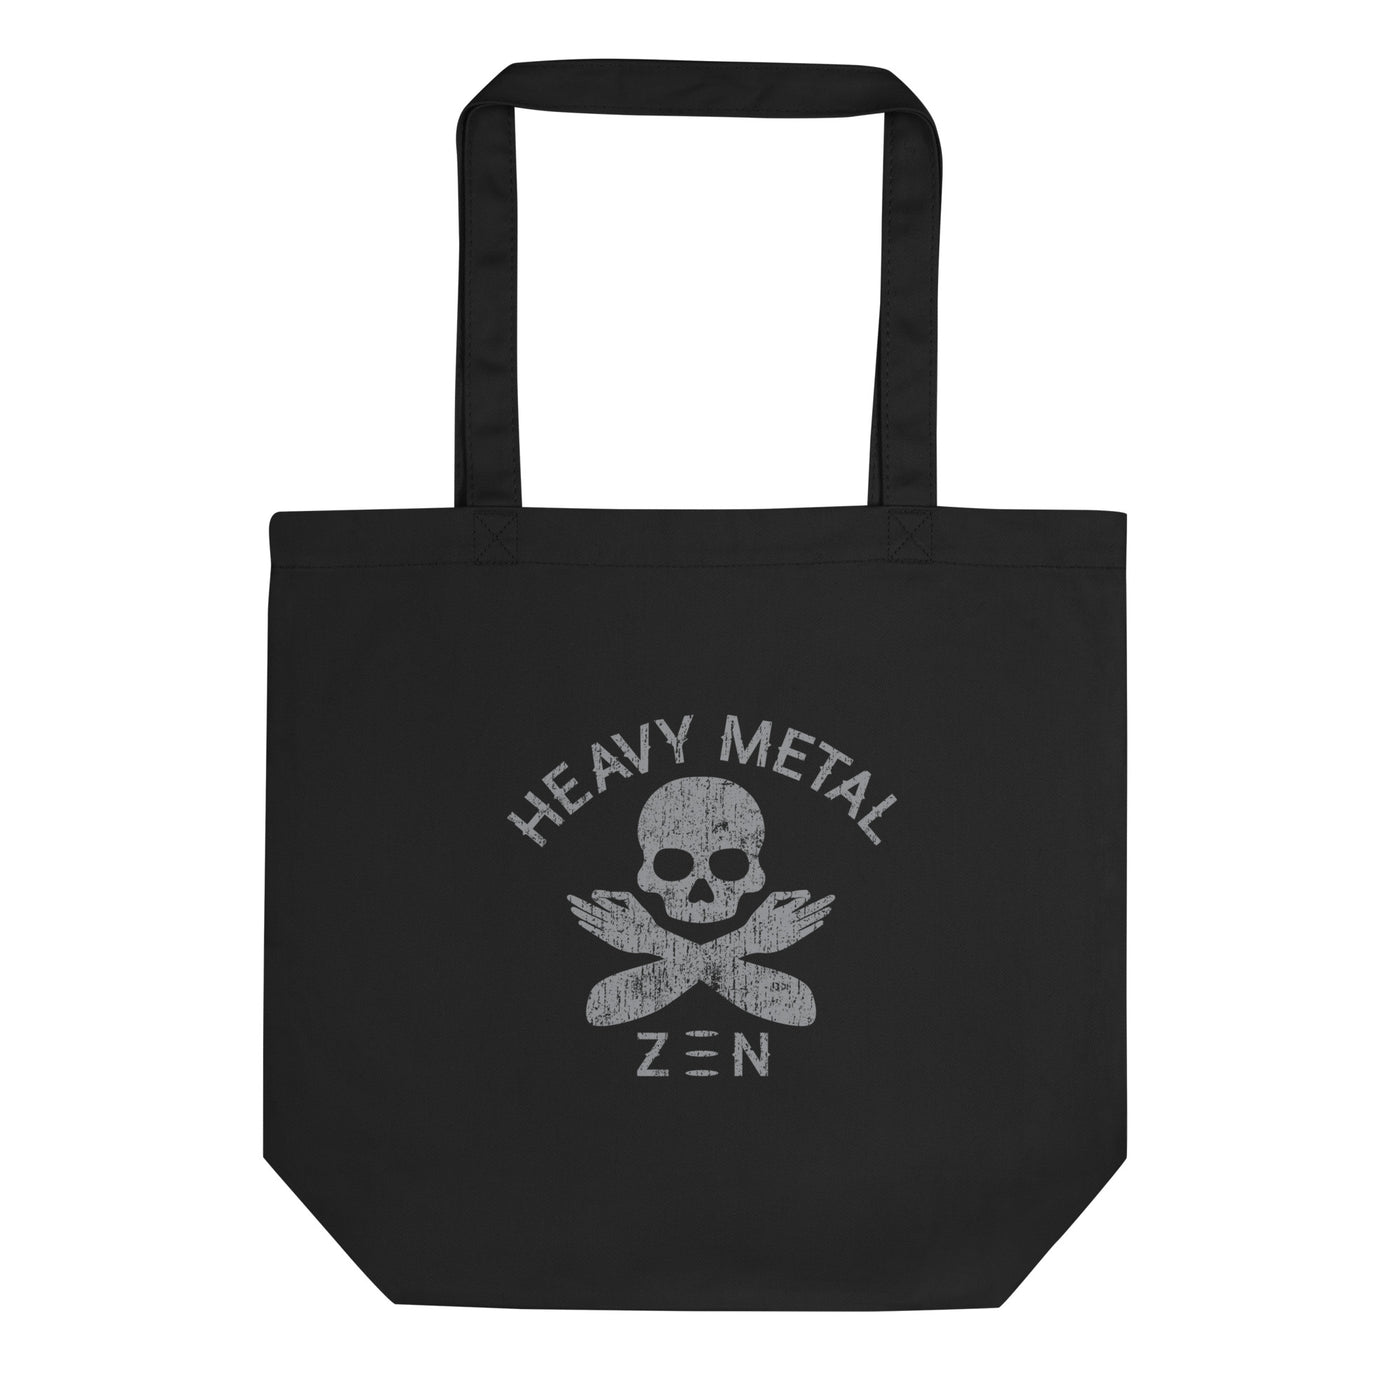 Heavy Metal Zen Black Organic Eco Tote Bag